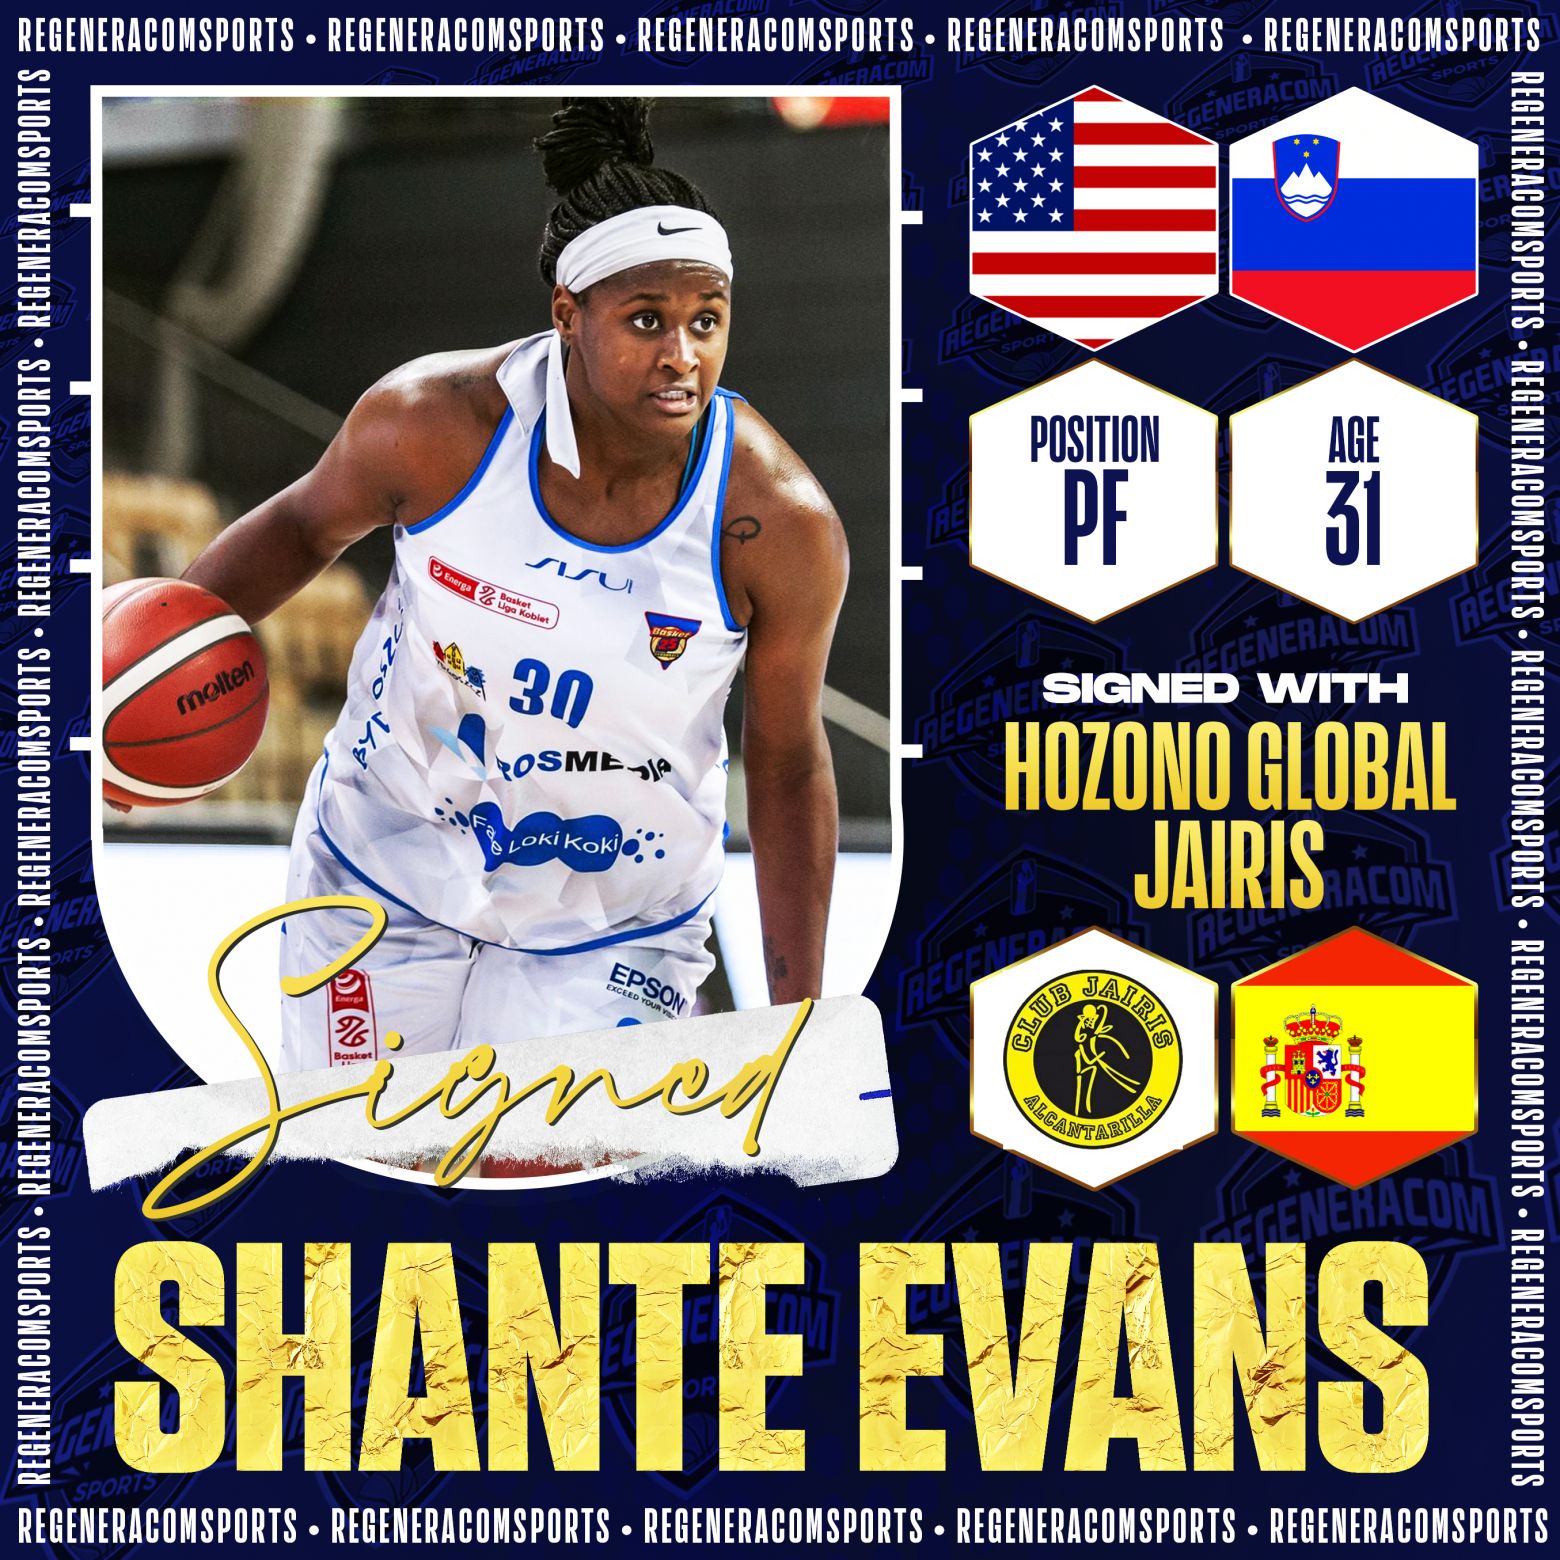 SHANTE EVANS has signed with Hozono Global Jairis for the 2022/23 season